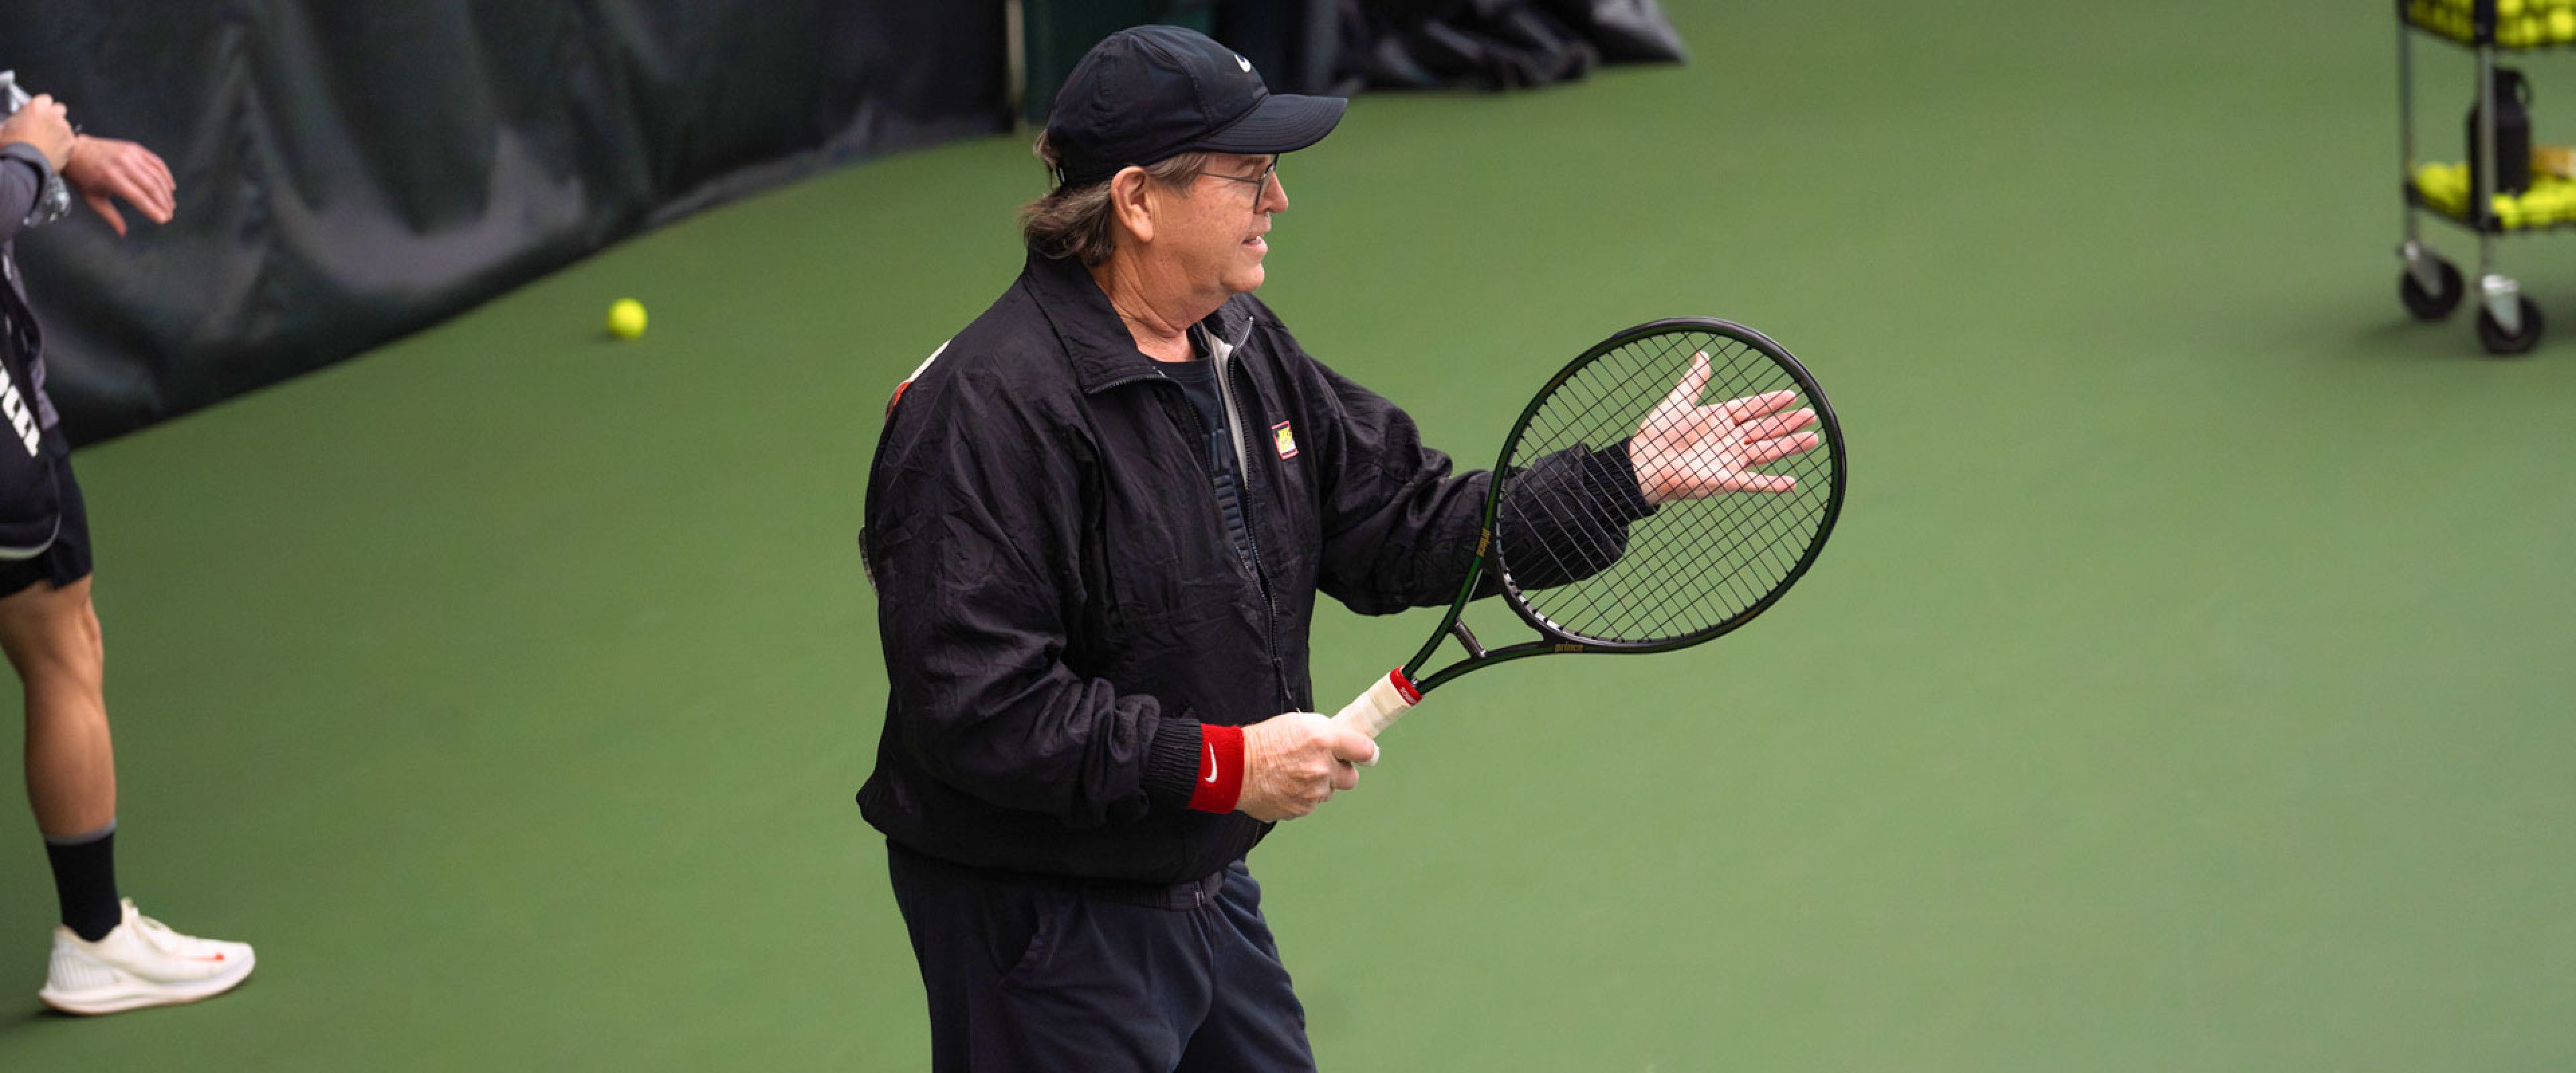 guy holding a black tennis racket wearing a black baseball hat